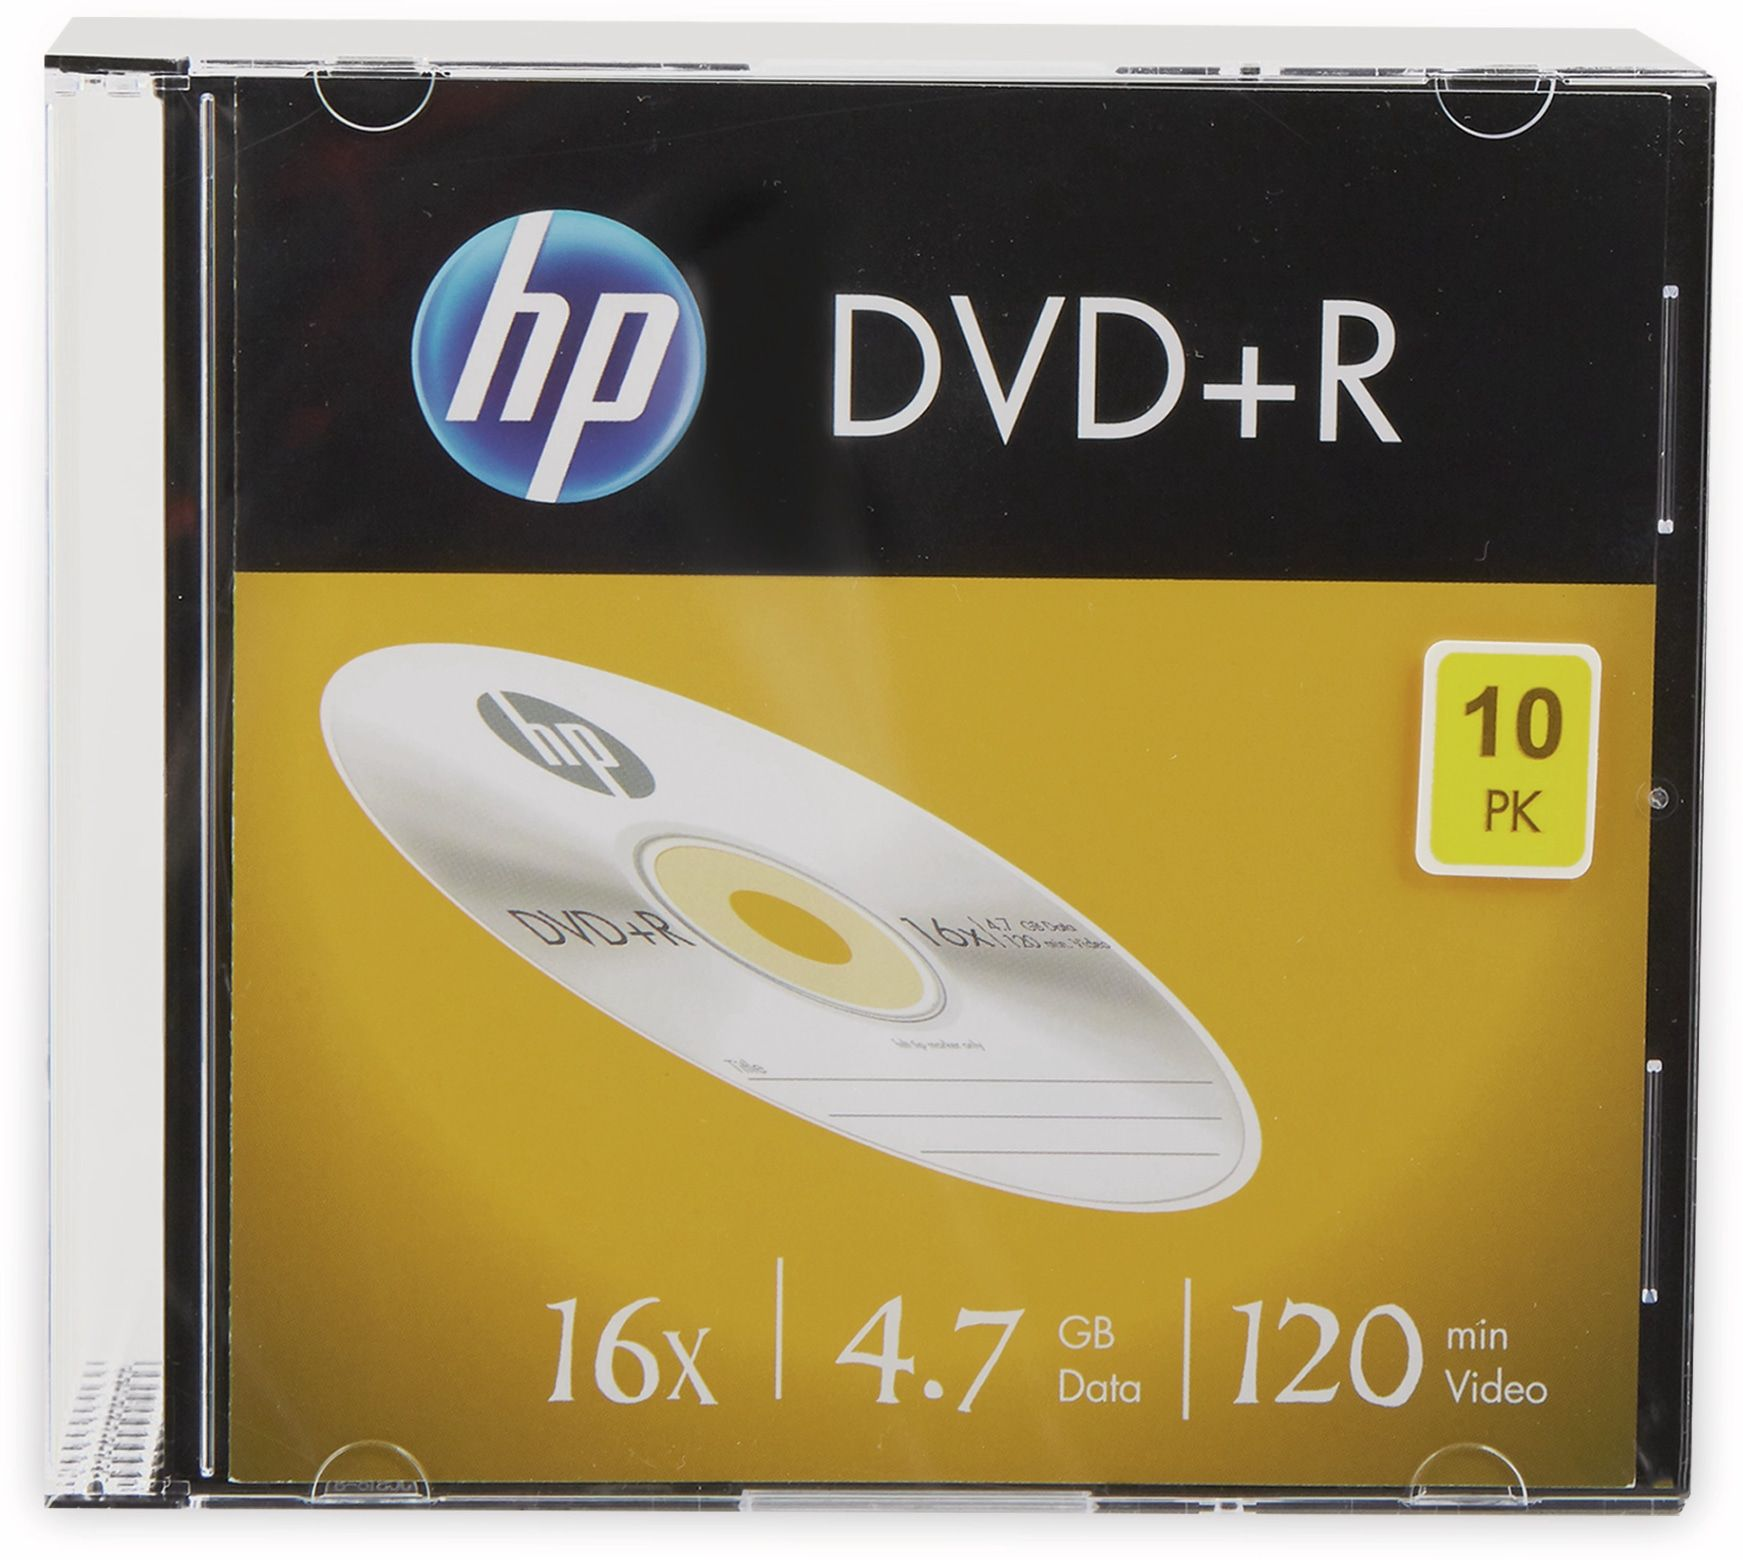 HP DVD+R 4.7GB, 10 120Min, CDs DVD+R Slimcase, 16x